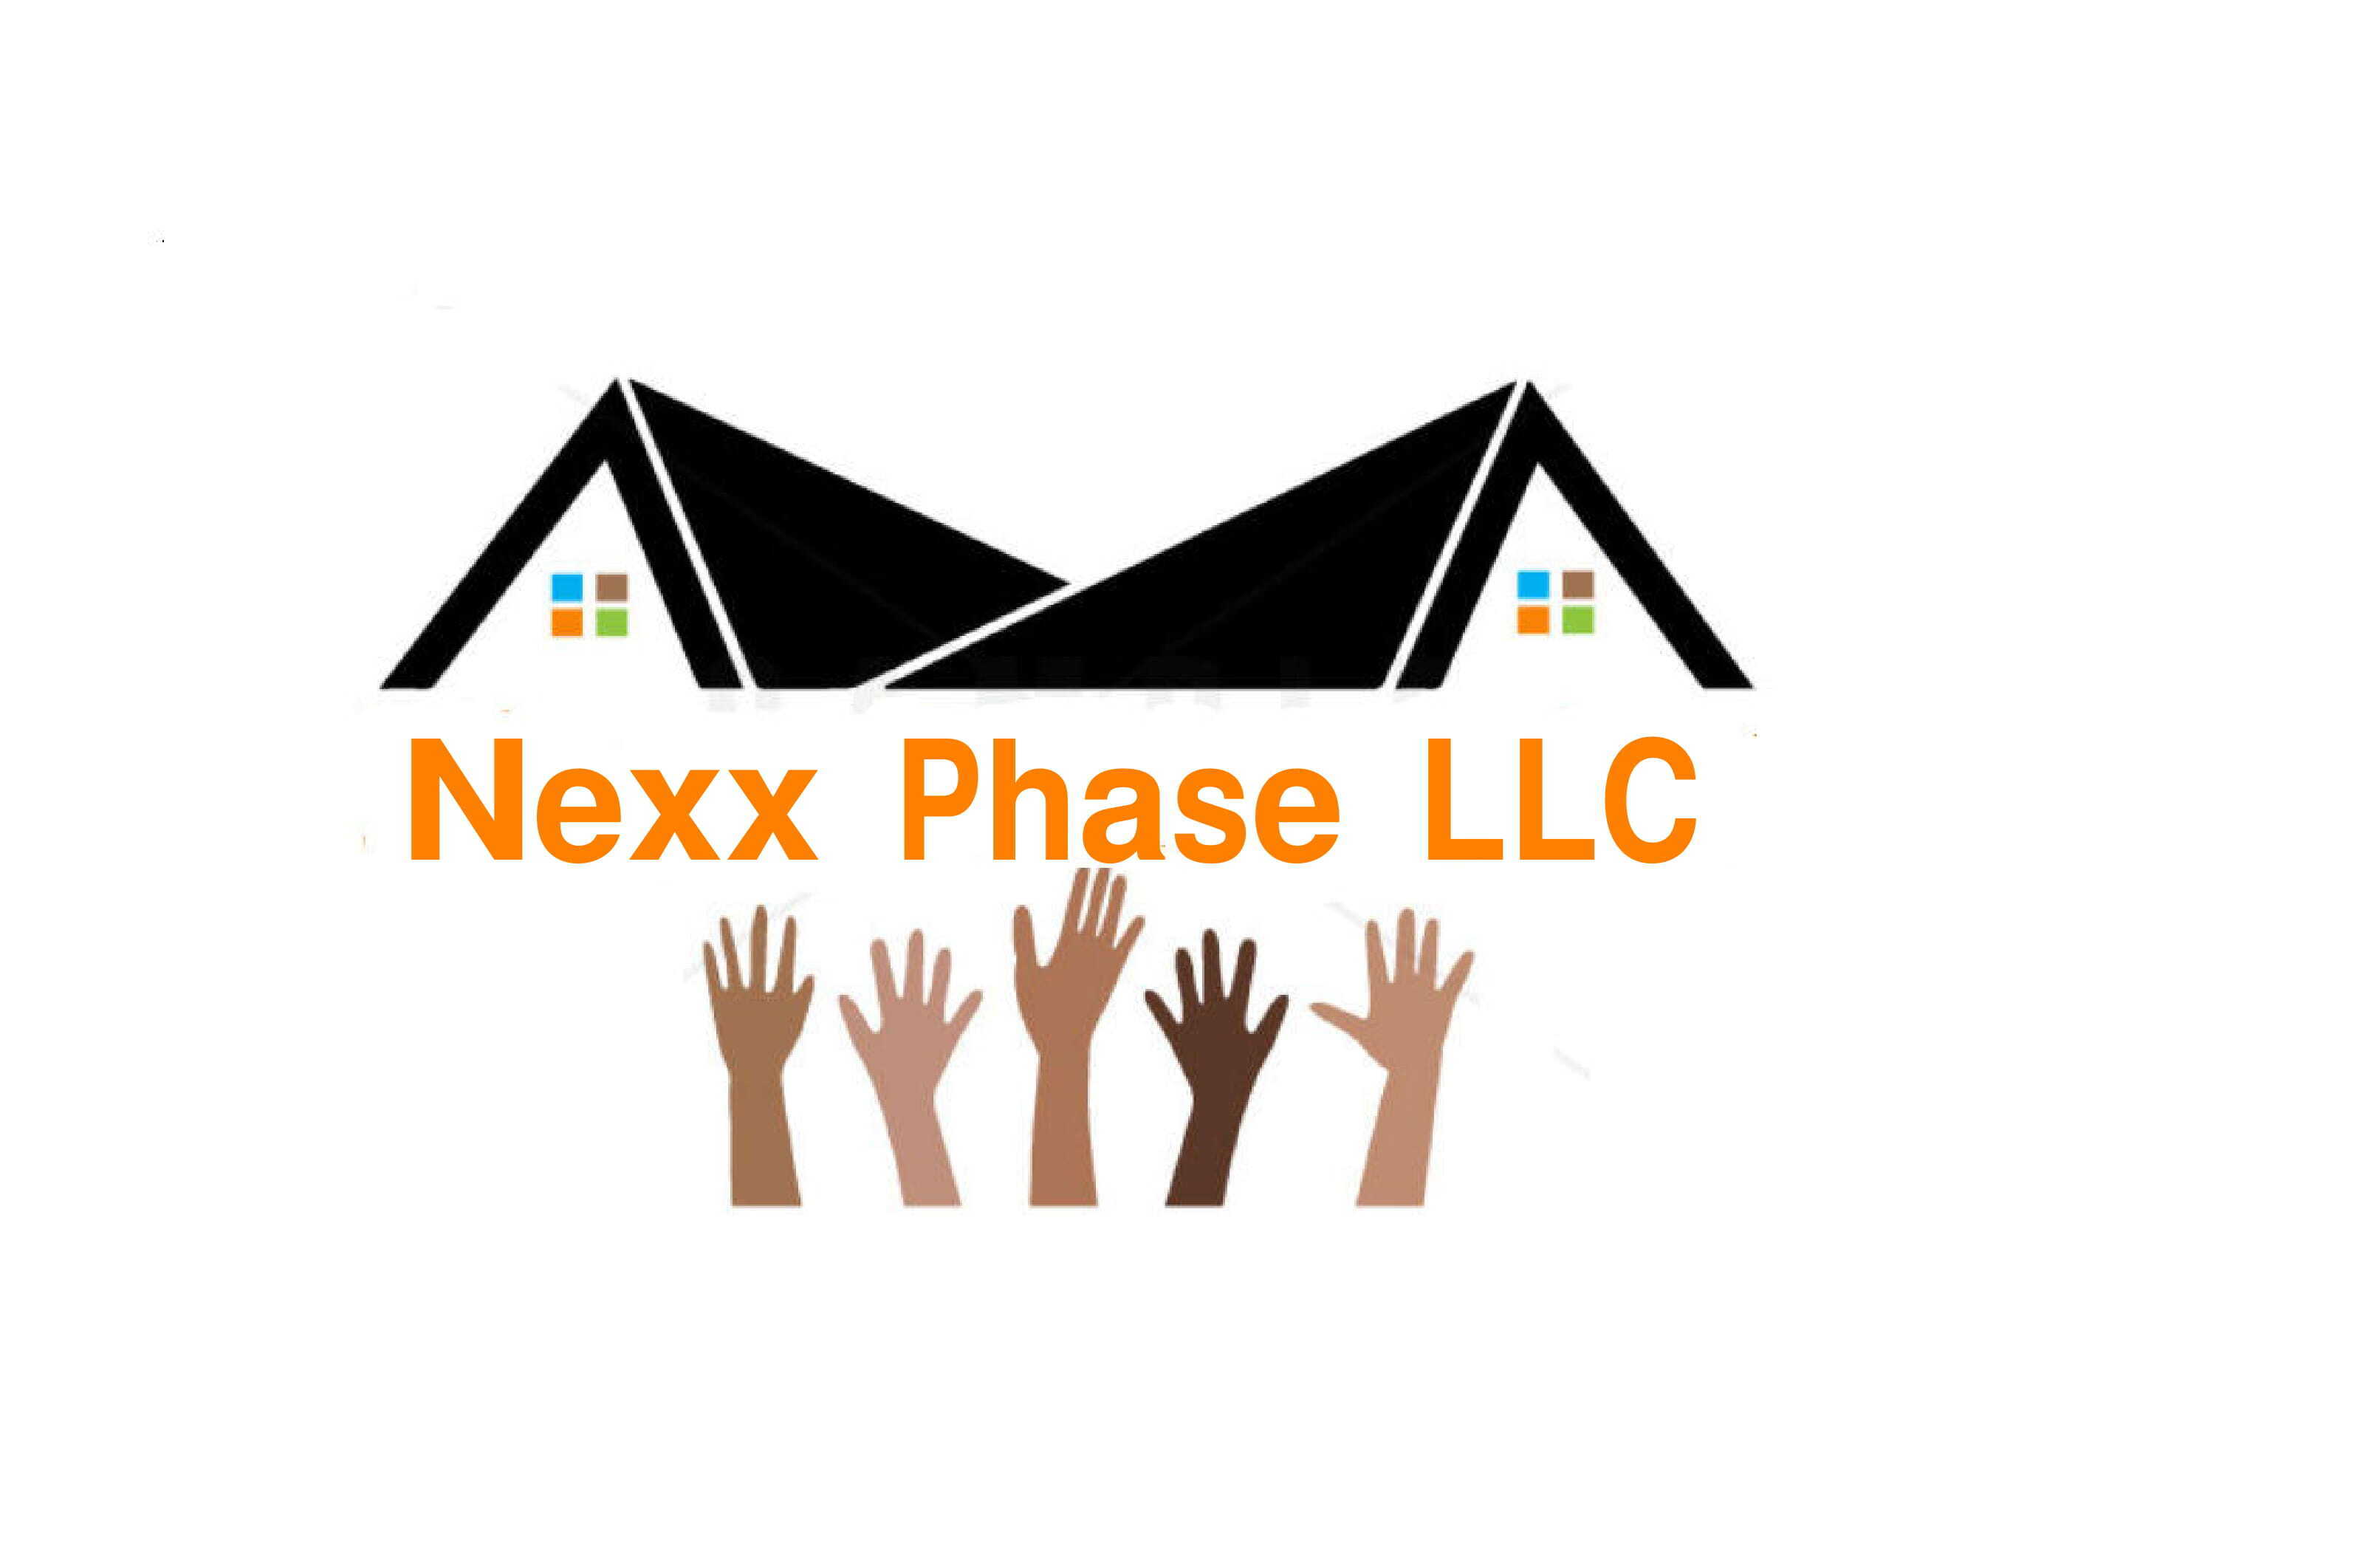 Nexx Phase